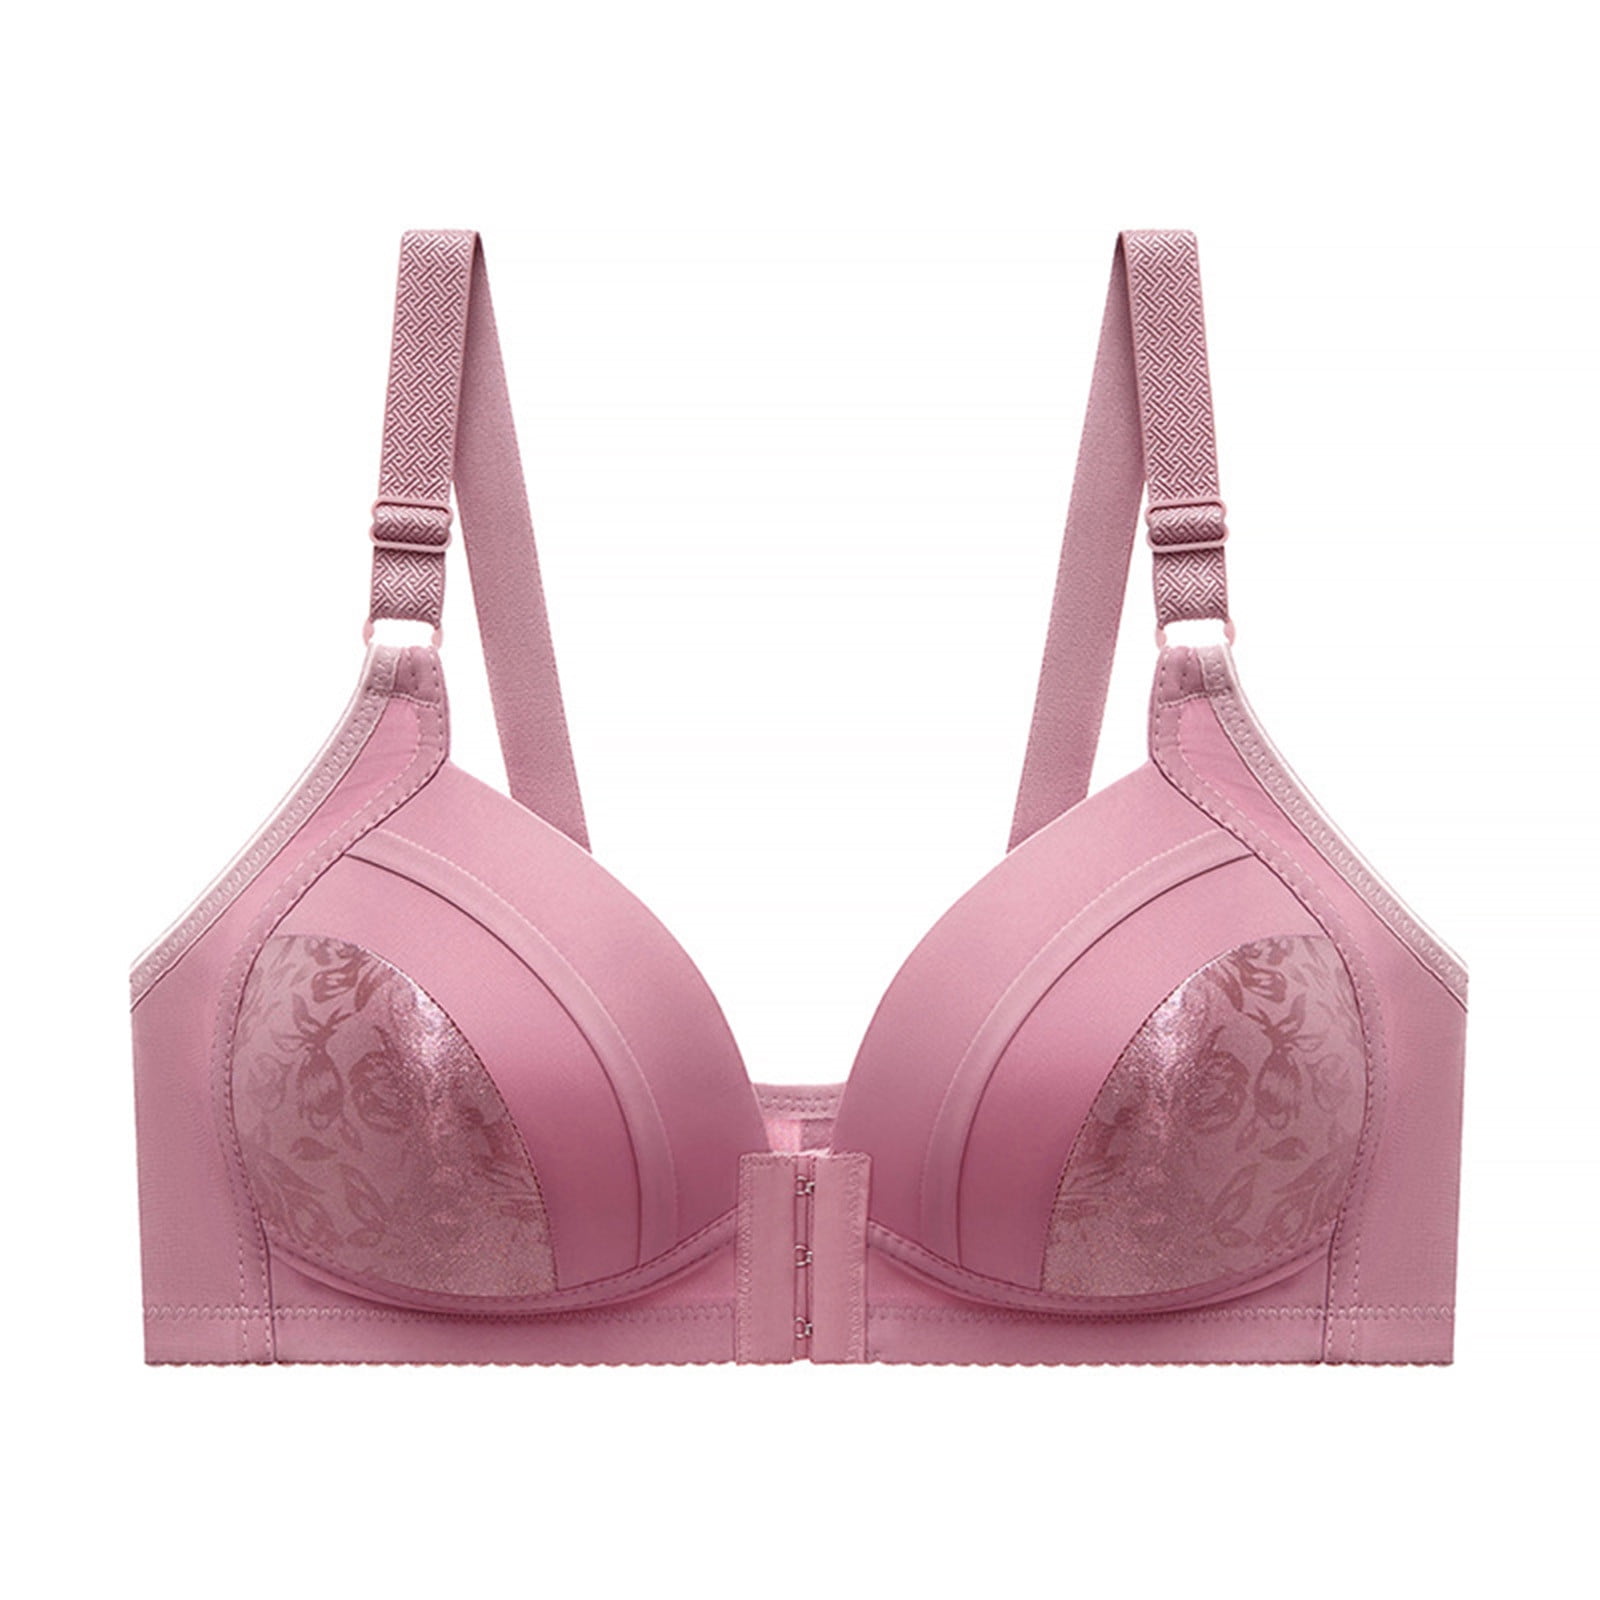 Ersazi 38 Ddd Bras For Women Woman'S Fashion Plus Size Wire Free  Comfortable Push Up Bra Underwear In Clearance Hot Pink Xl 